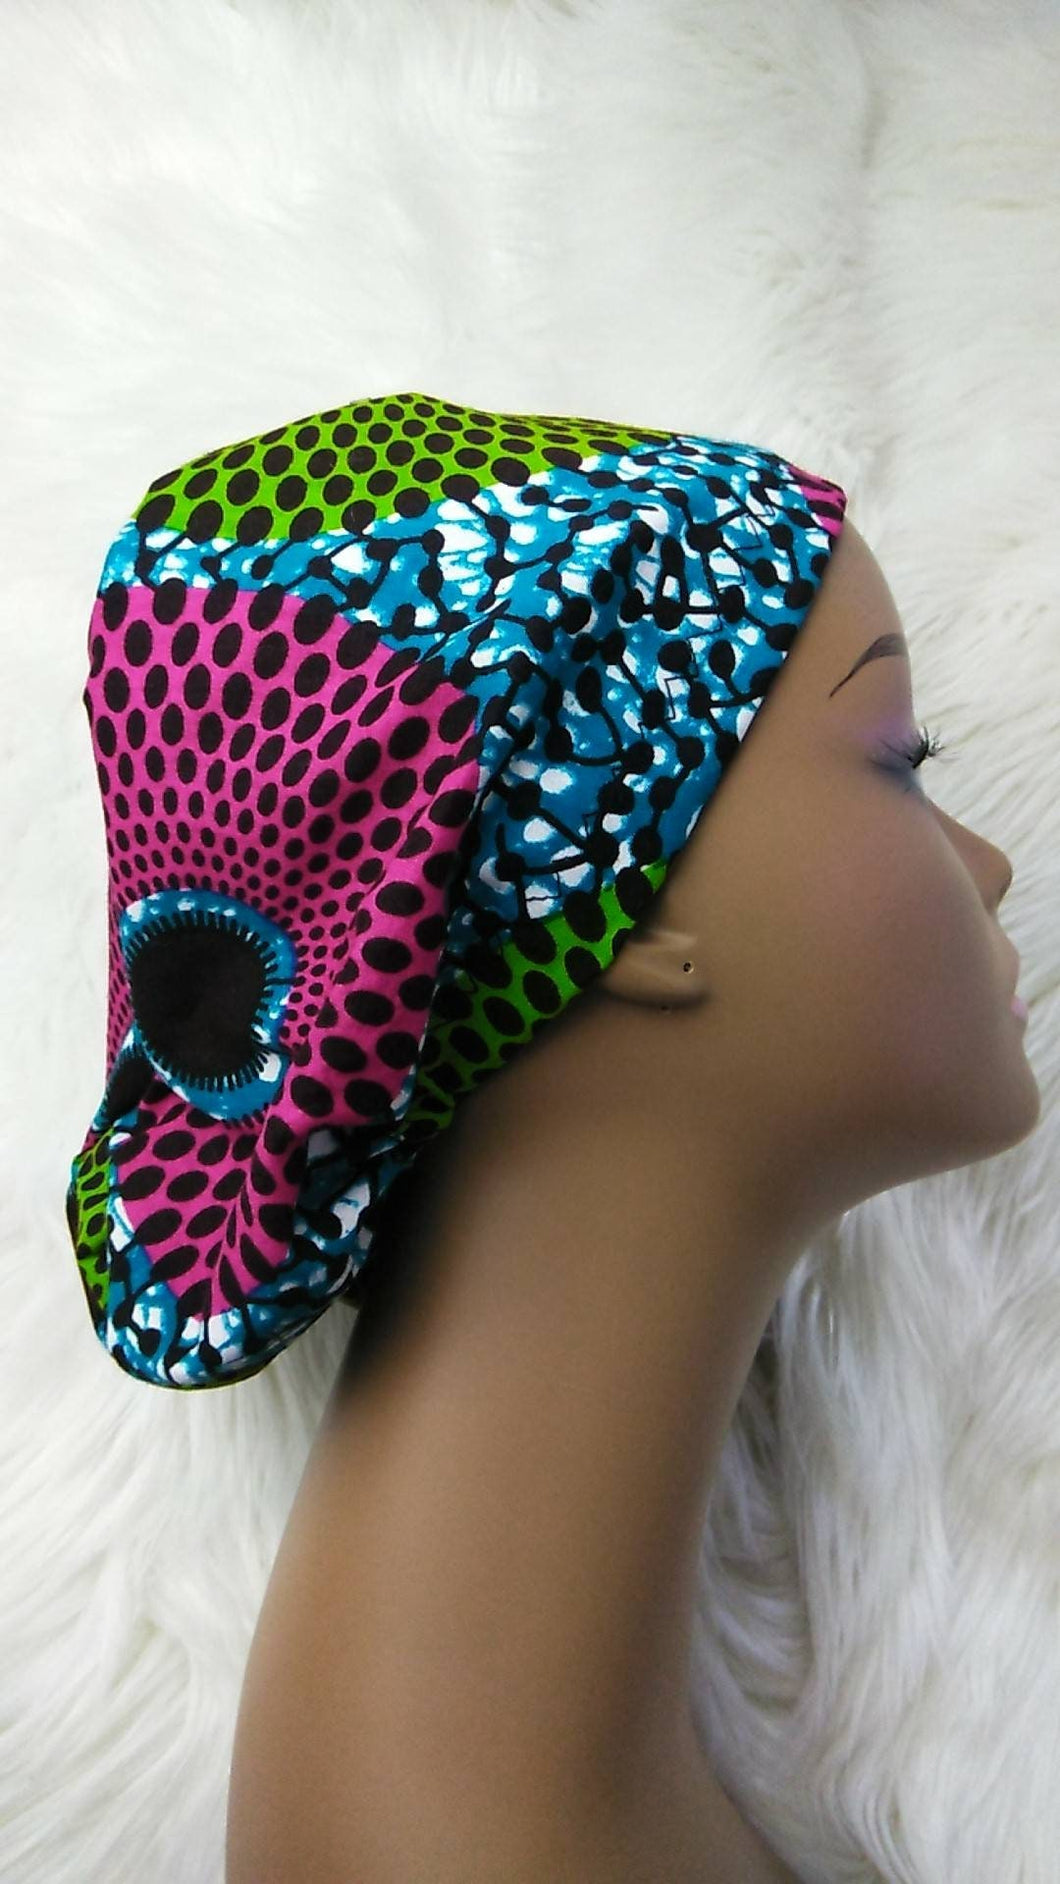 Surgical SCRUB HAT CAP, Ankara Europe style nursing caps, 100% cotton fabric, satin lining option blue pink green nsubura  African Print